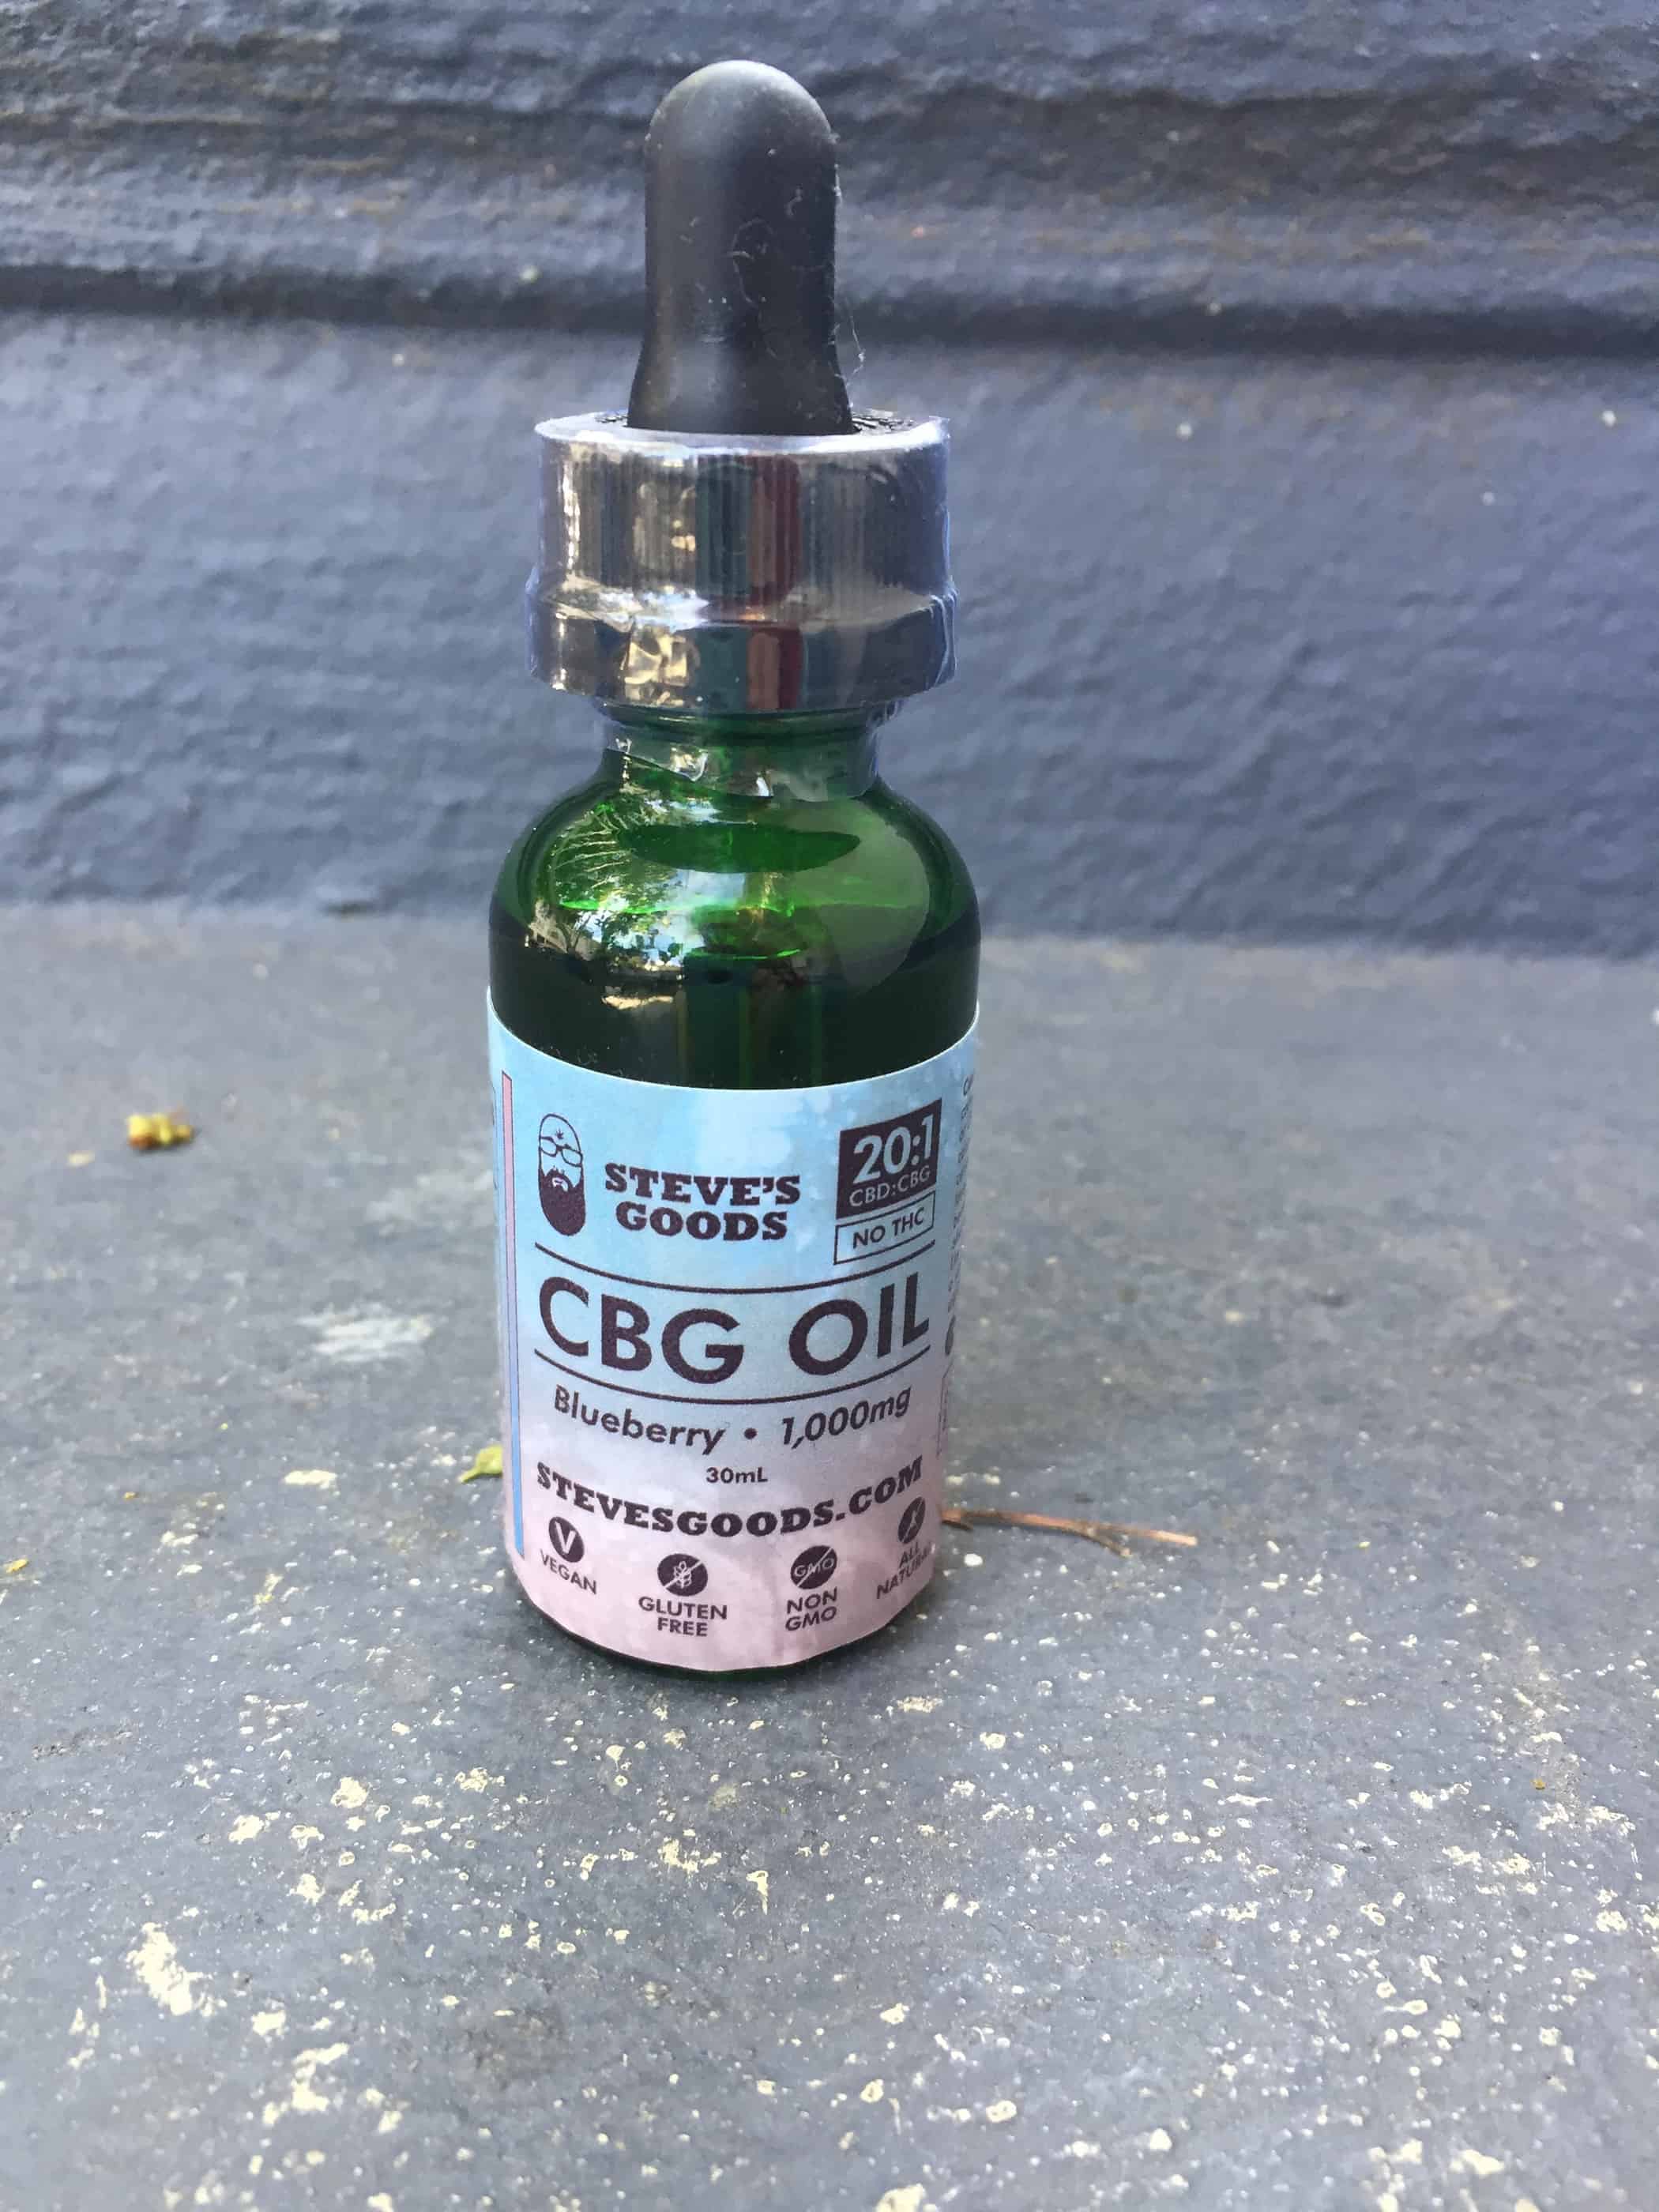 steves goods cbd cbg 20 1 oil 500 mg blueberry og blast review Save On Cannabis review